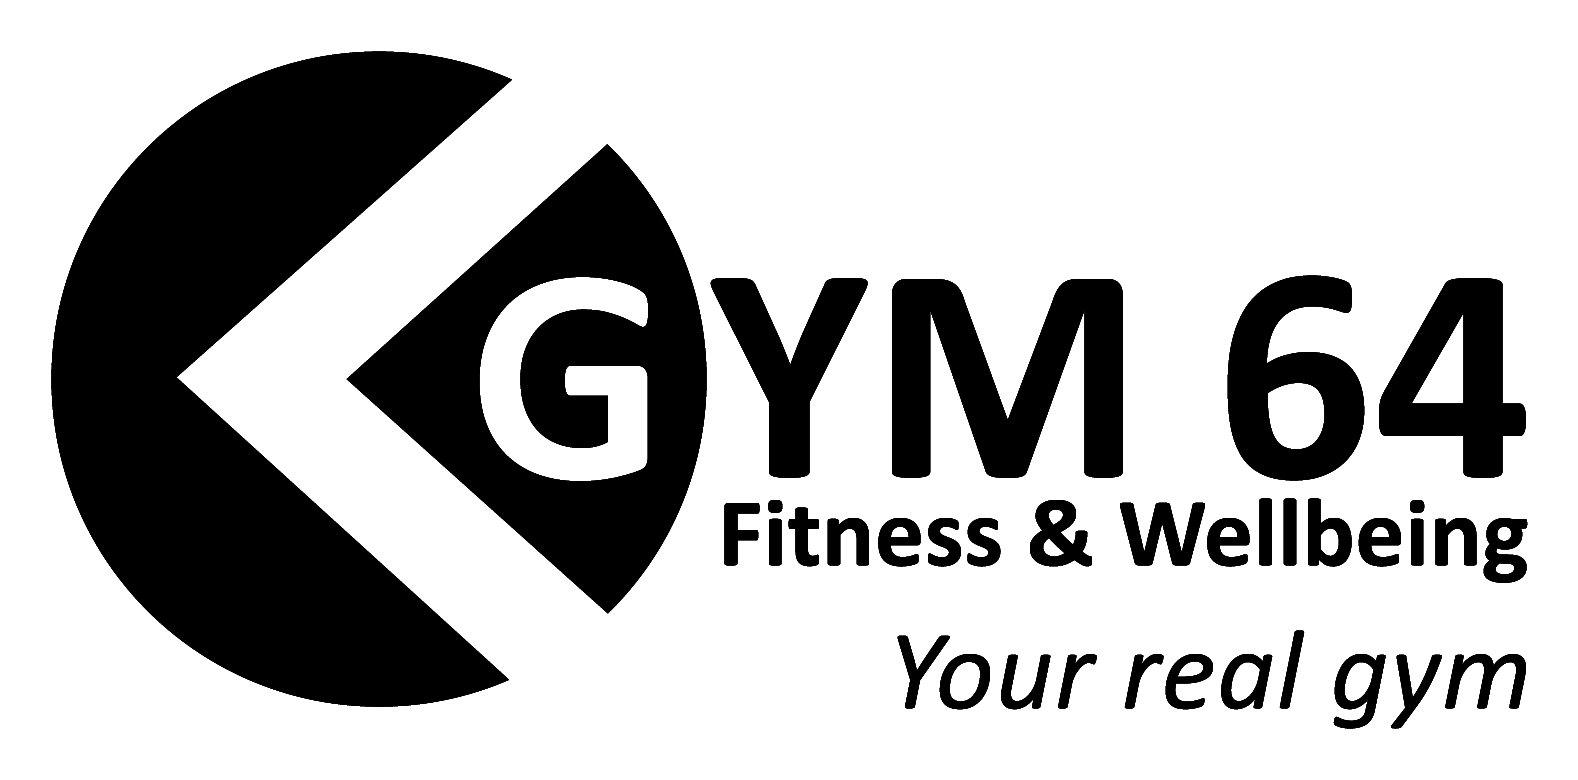 Gym64_Black_Logo_2021